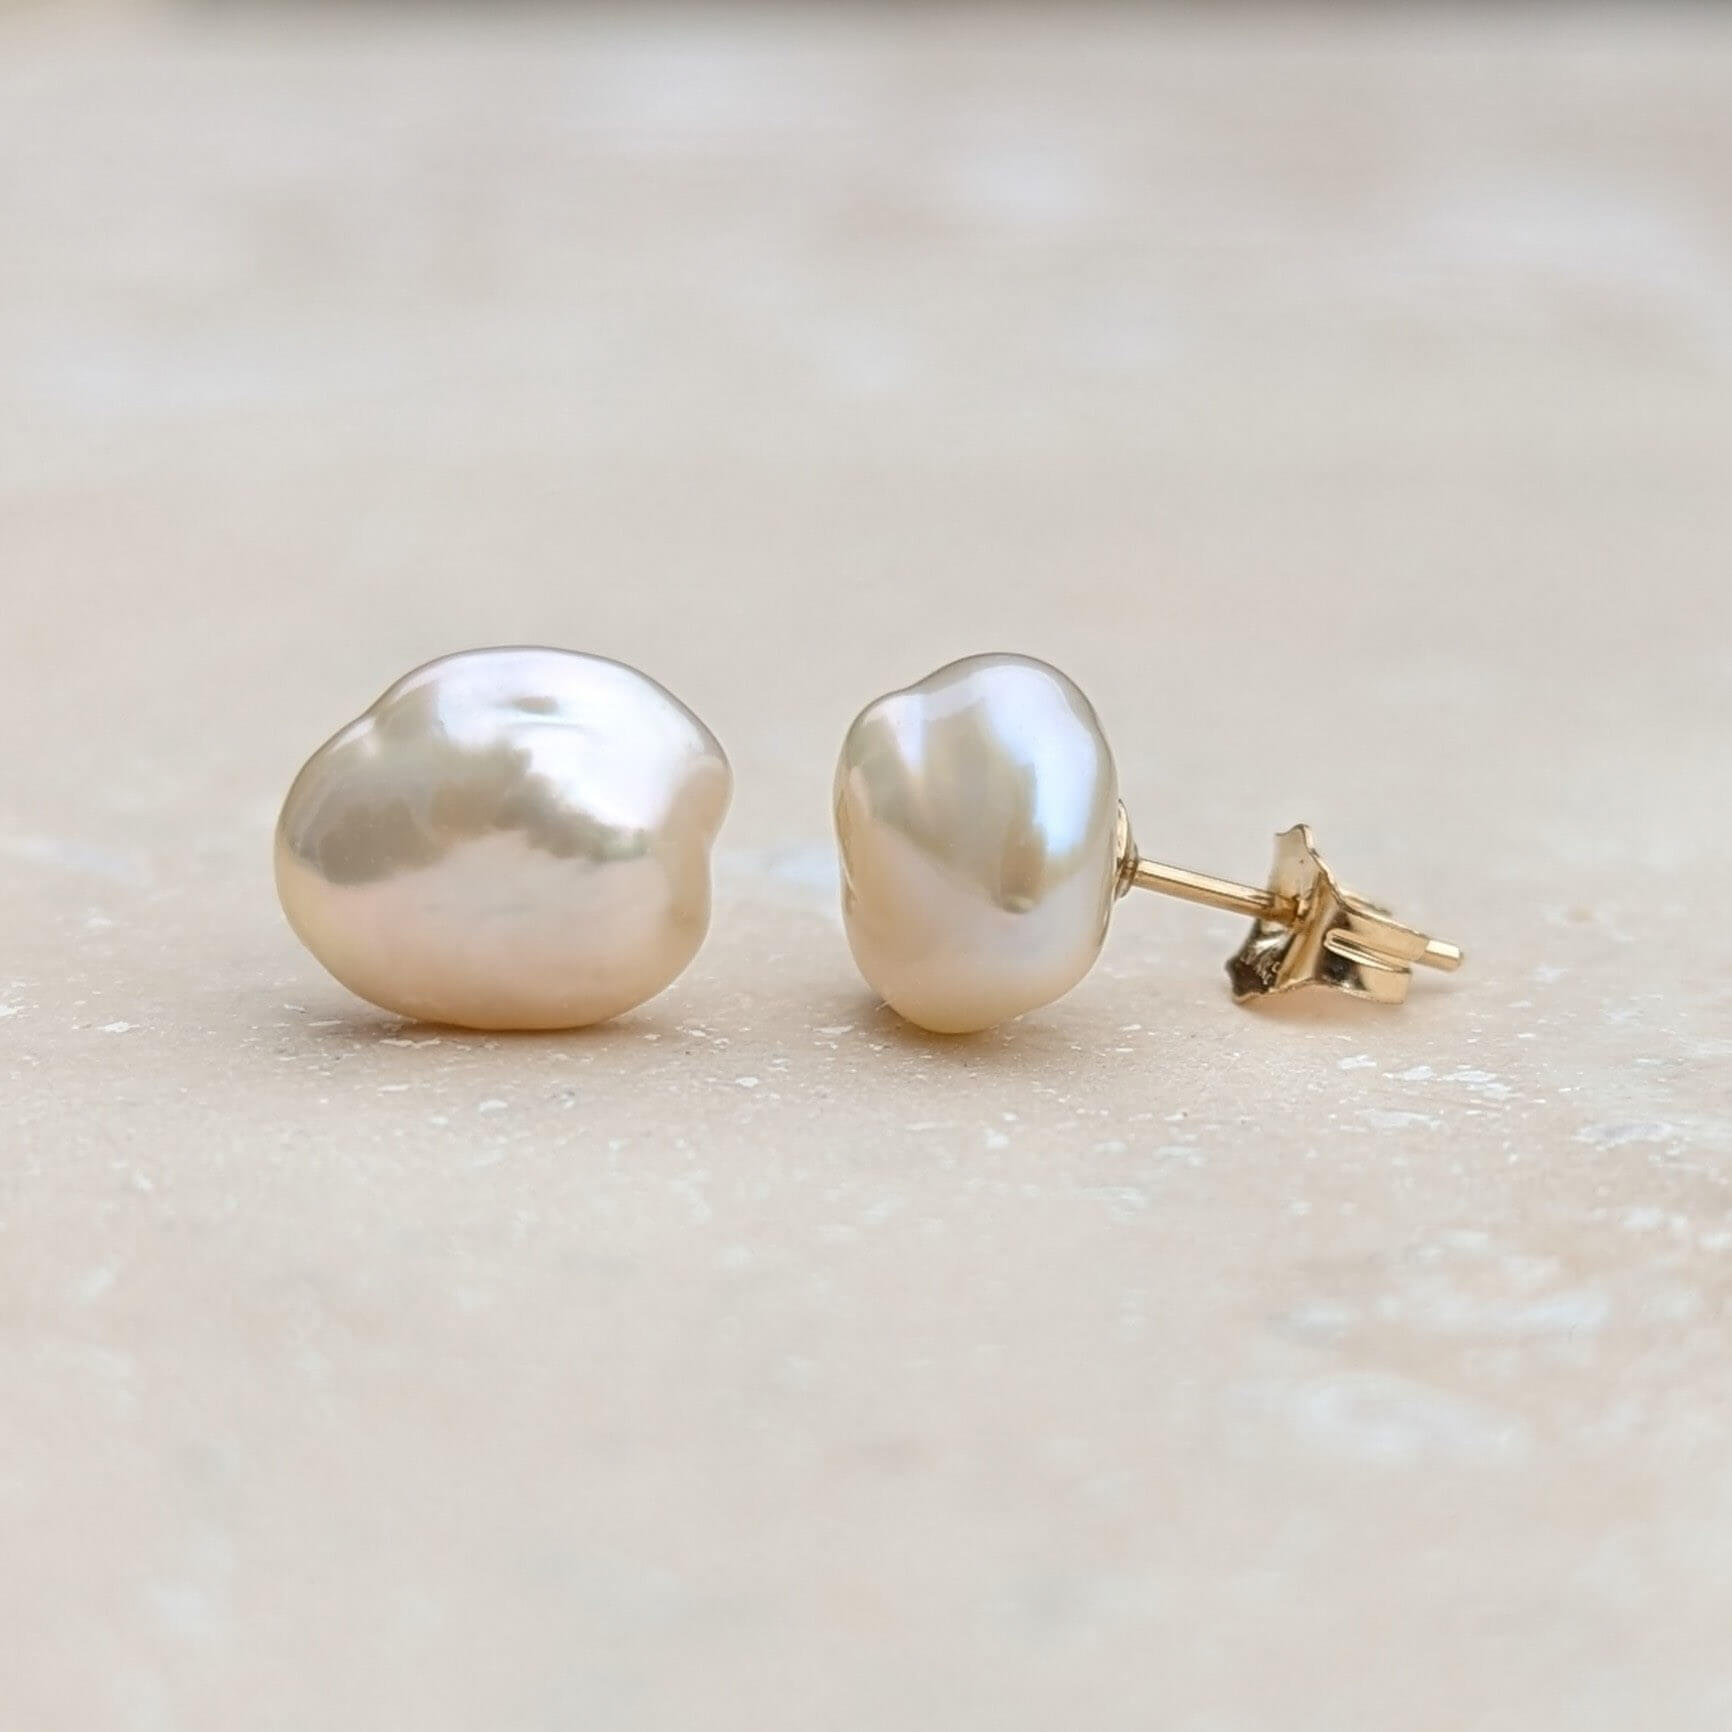 keshi pearl stud earrings in gold filled